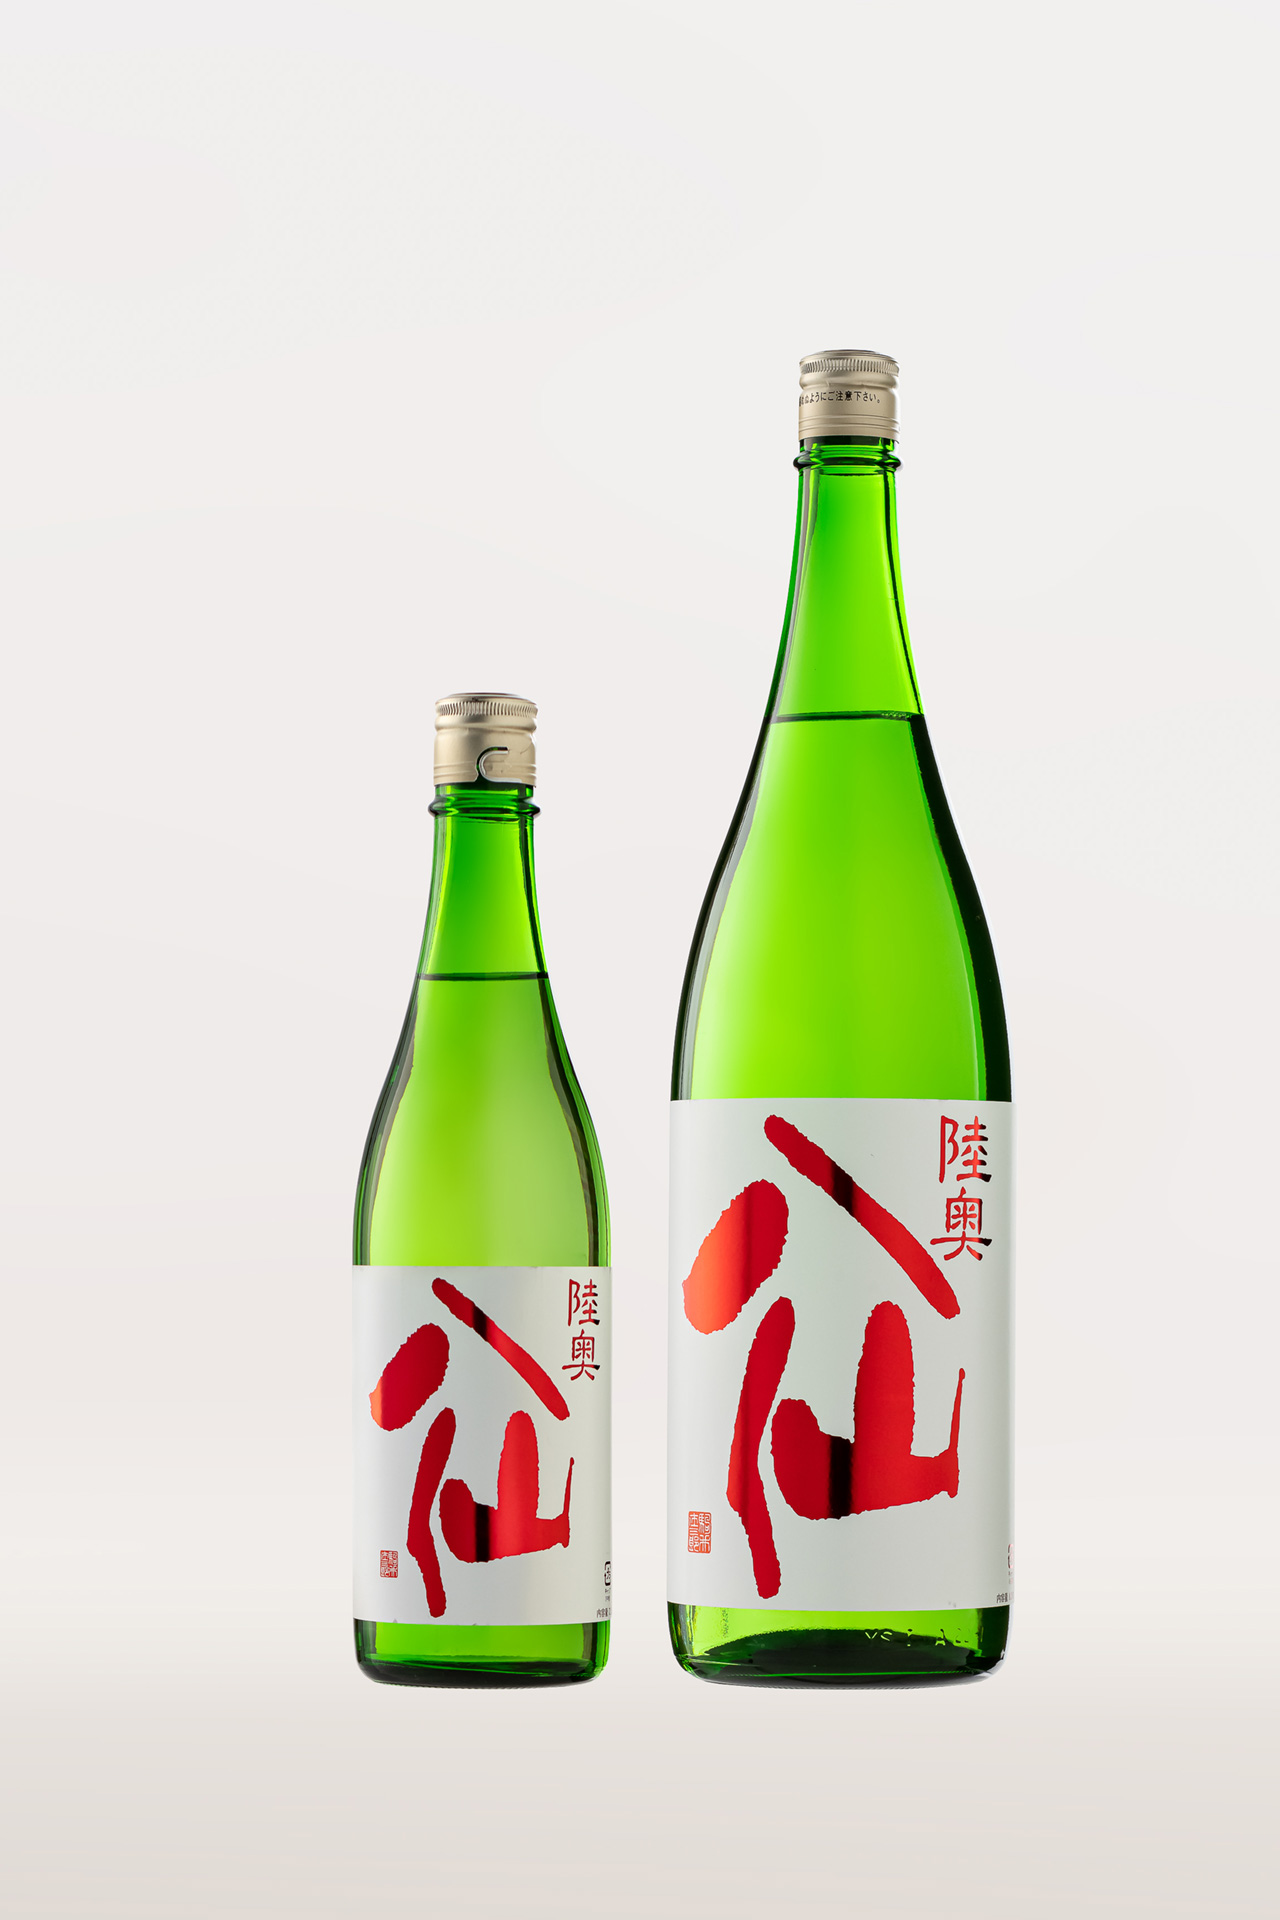 Mutsu Hassen Label rouge, Spécial Junmai